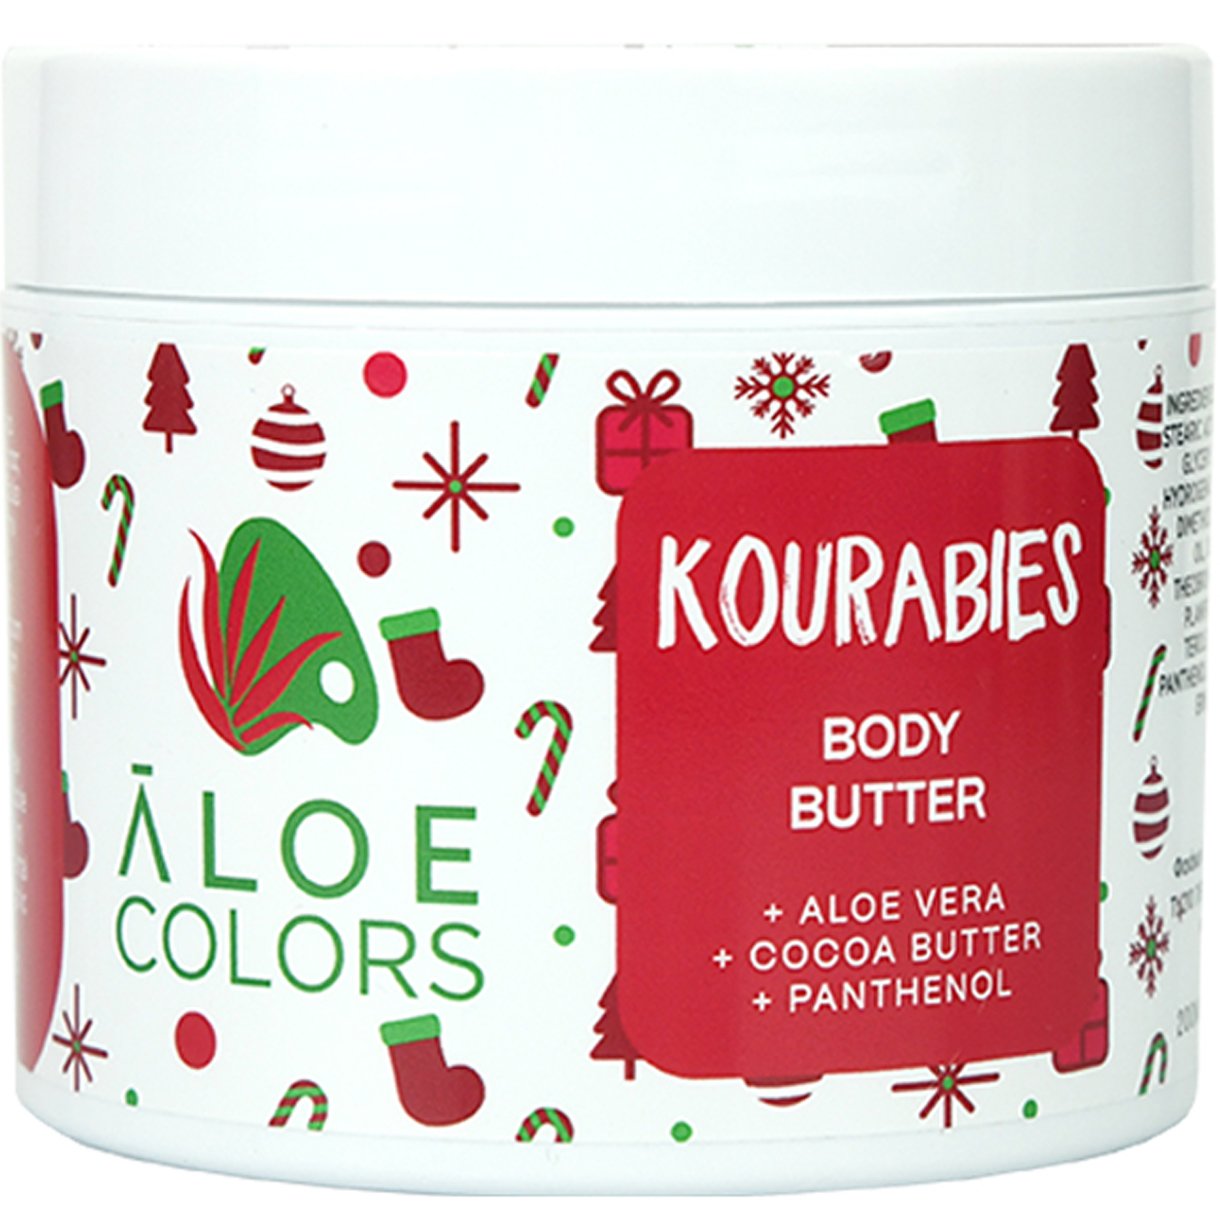 Aloe Colors Body Butter Kourabies Ενυδατικό Βούτυρο Σώματος με Οργανική Αλόη & Χριστουγεννιάτικο Άρωμα 200ml